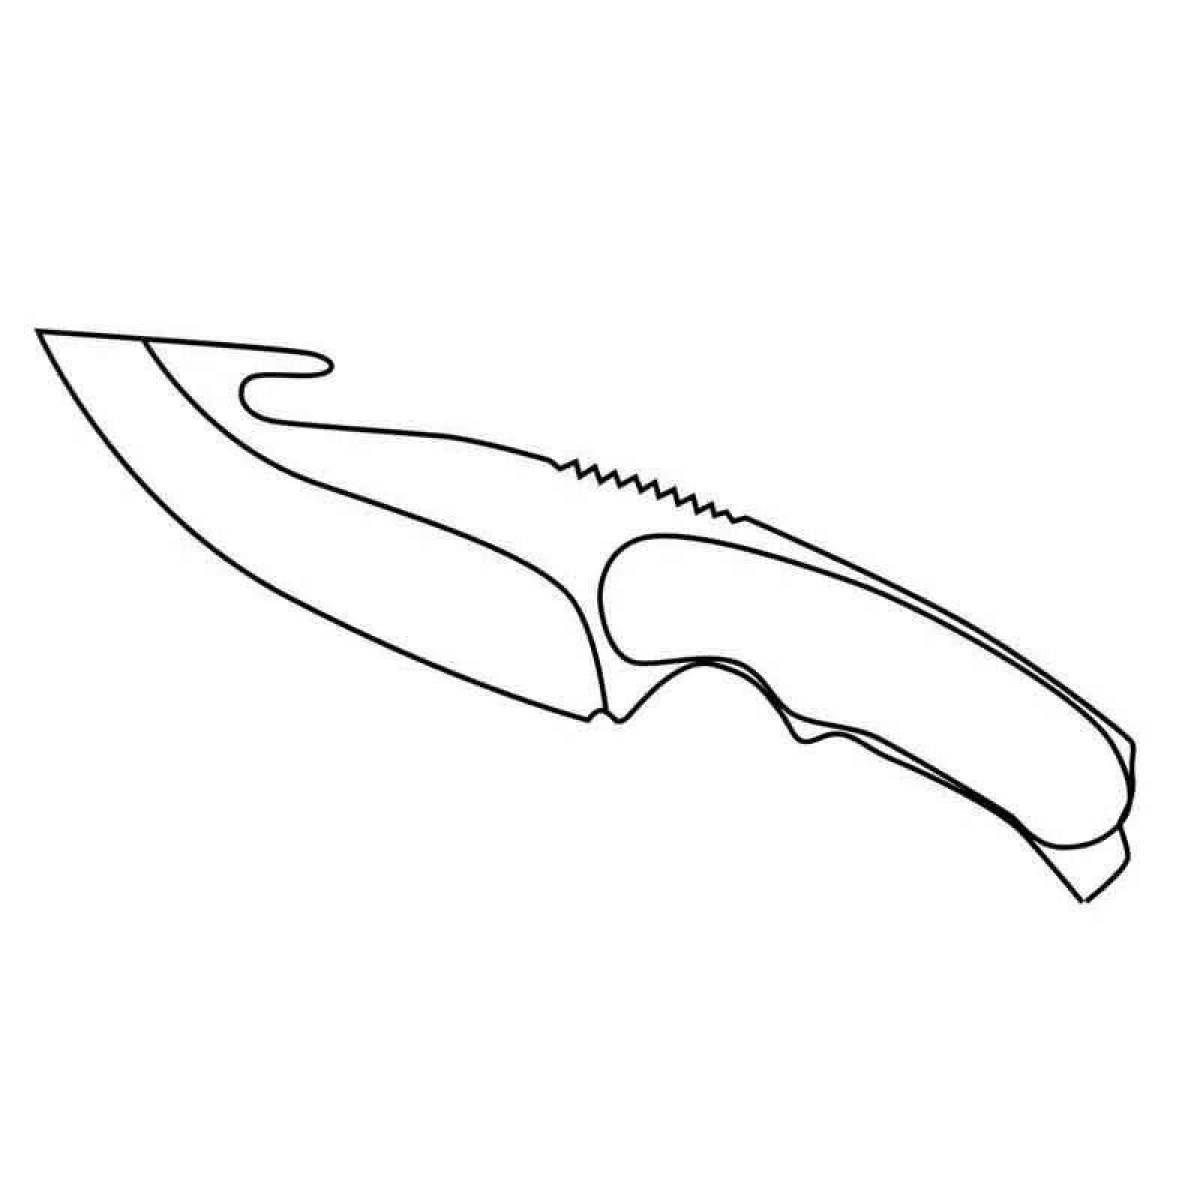 Нож крюк из стандофф 2